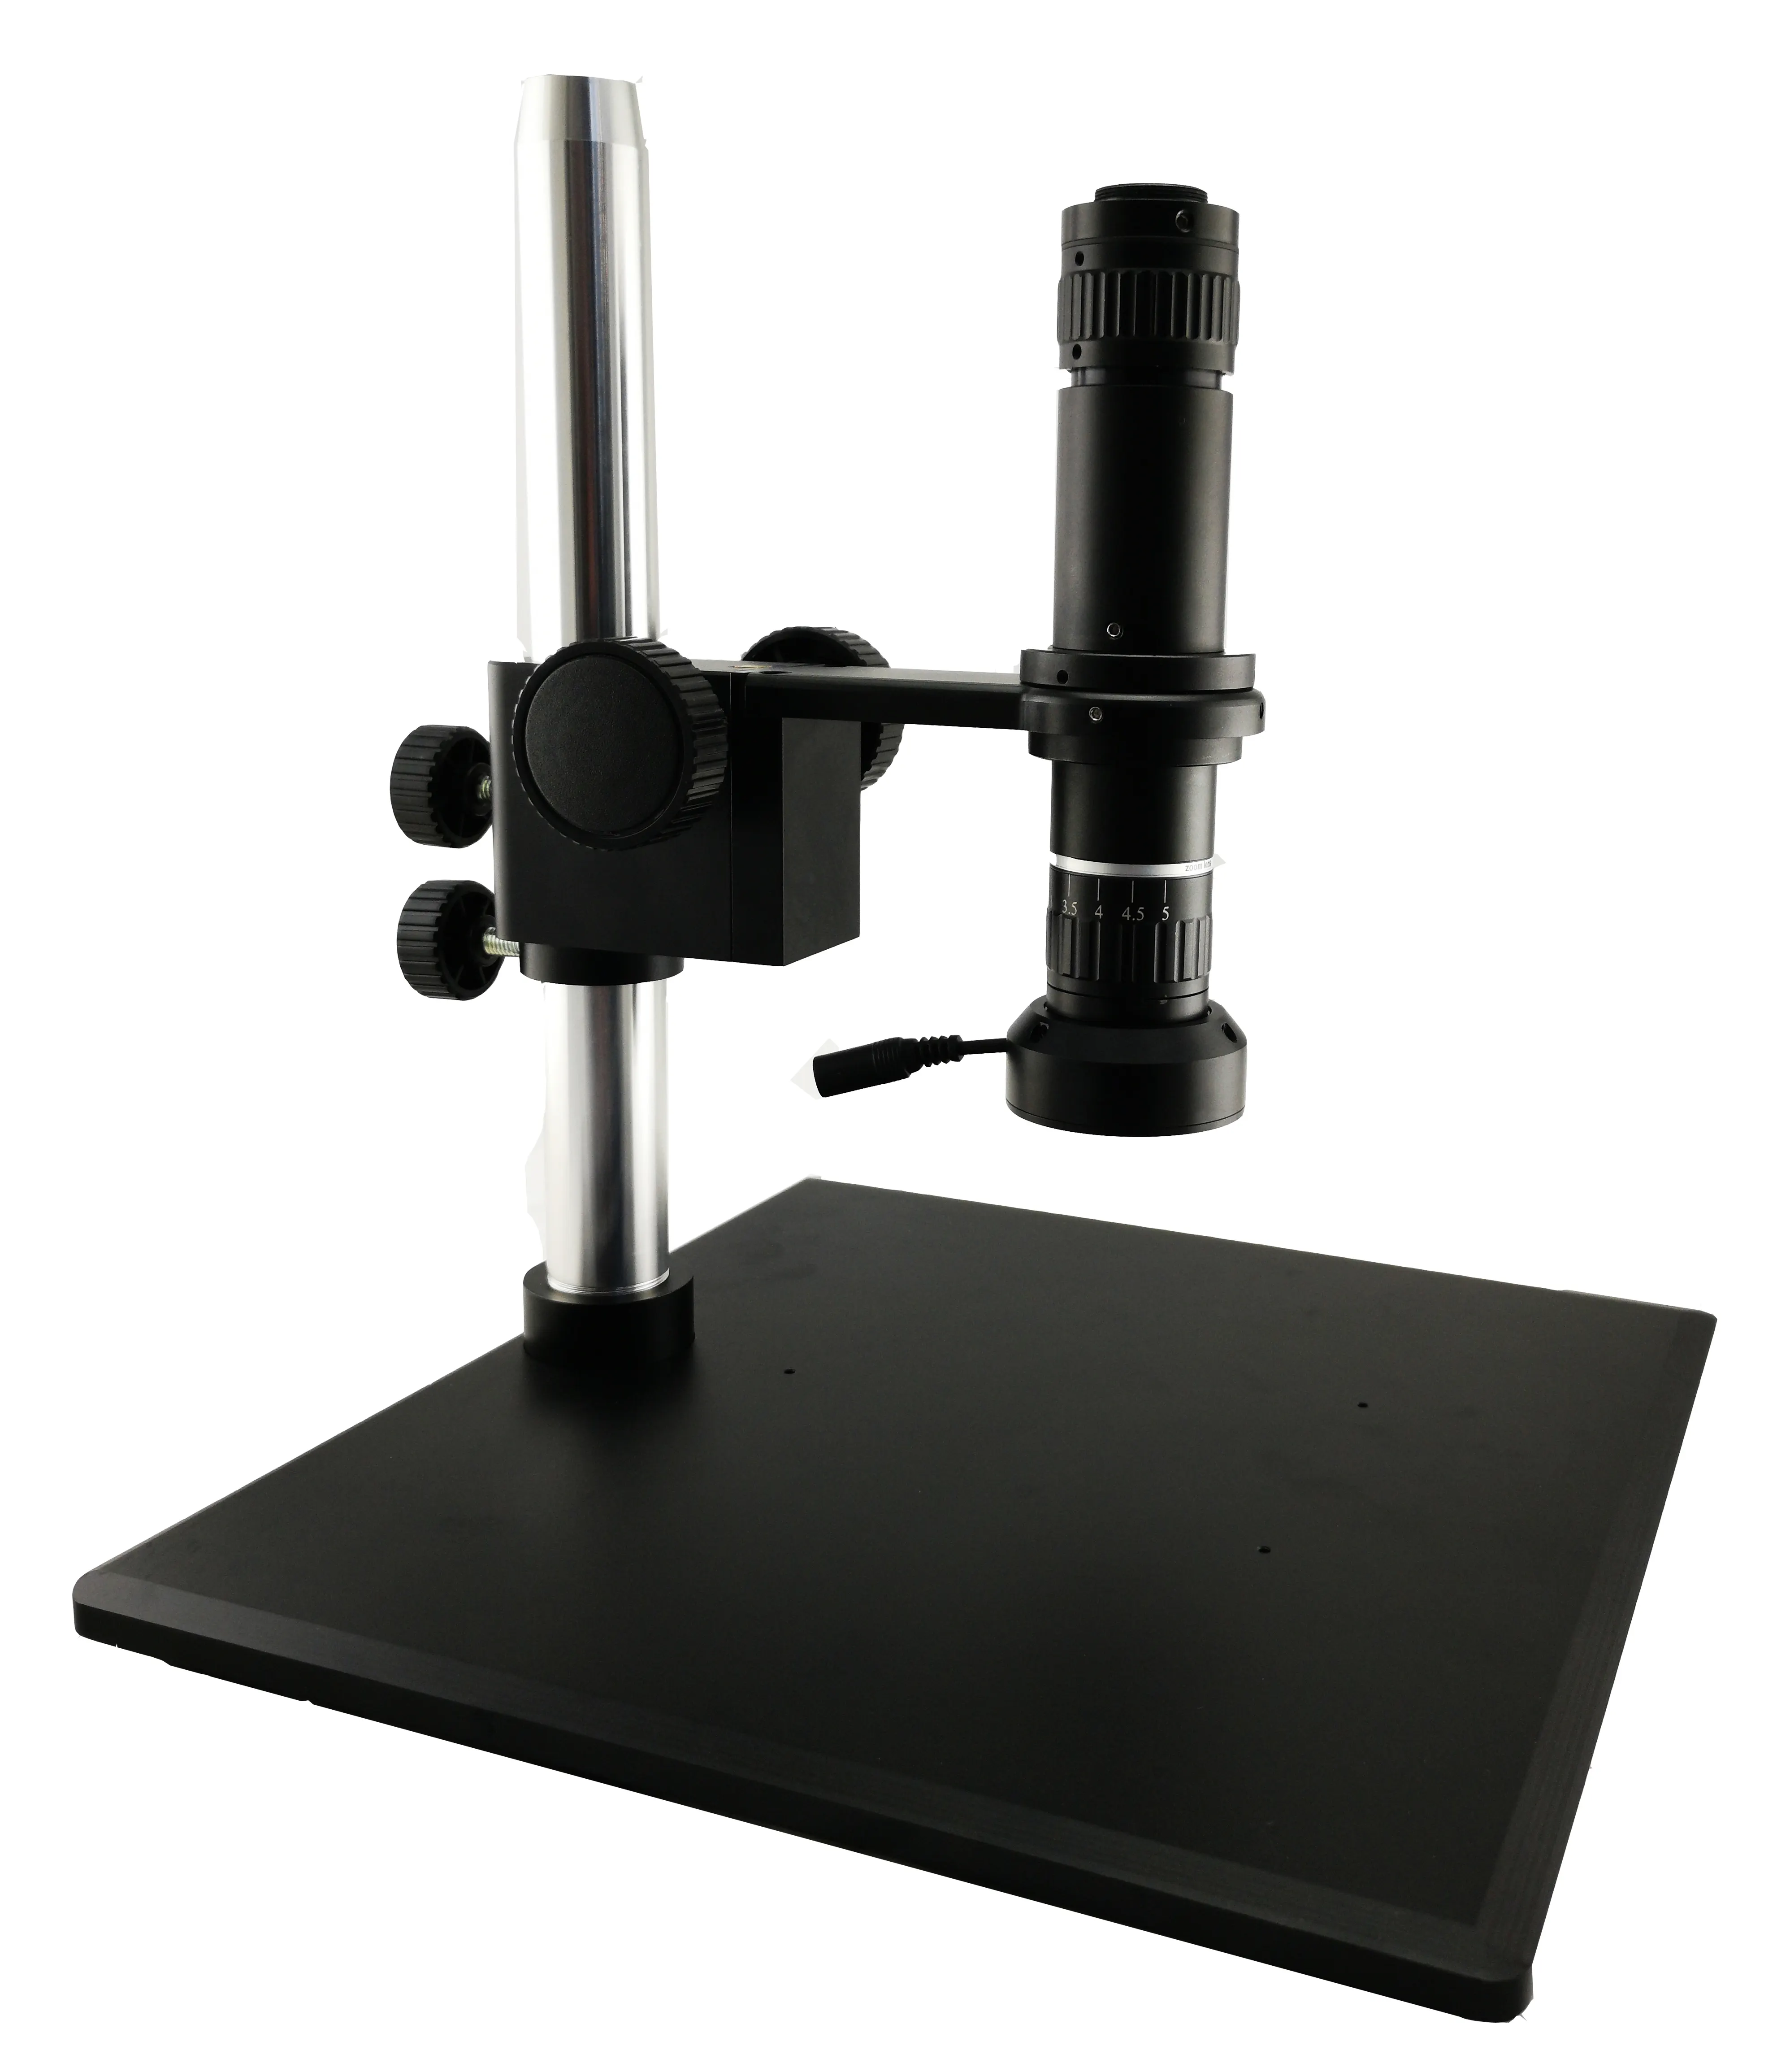 Bestscope BS-1080 Series 30% off Industrial Camera Digital Microscope with best price